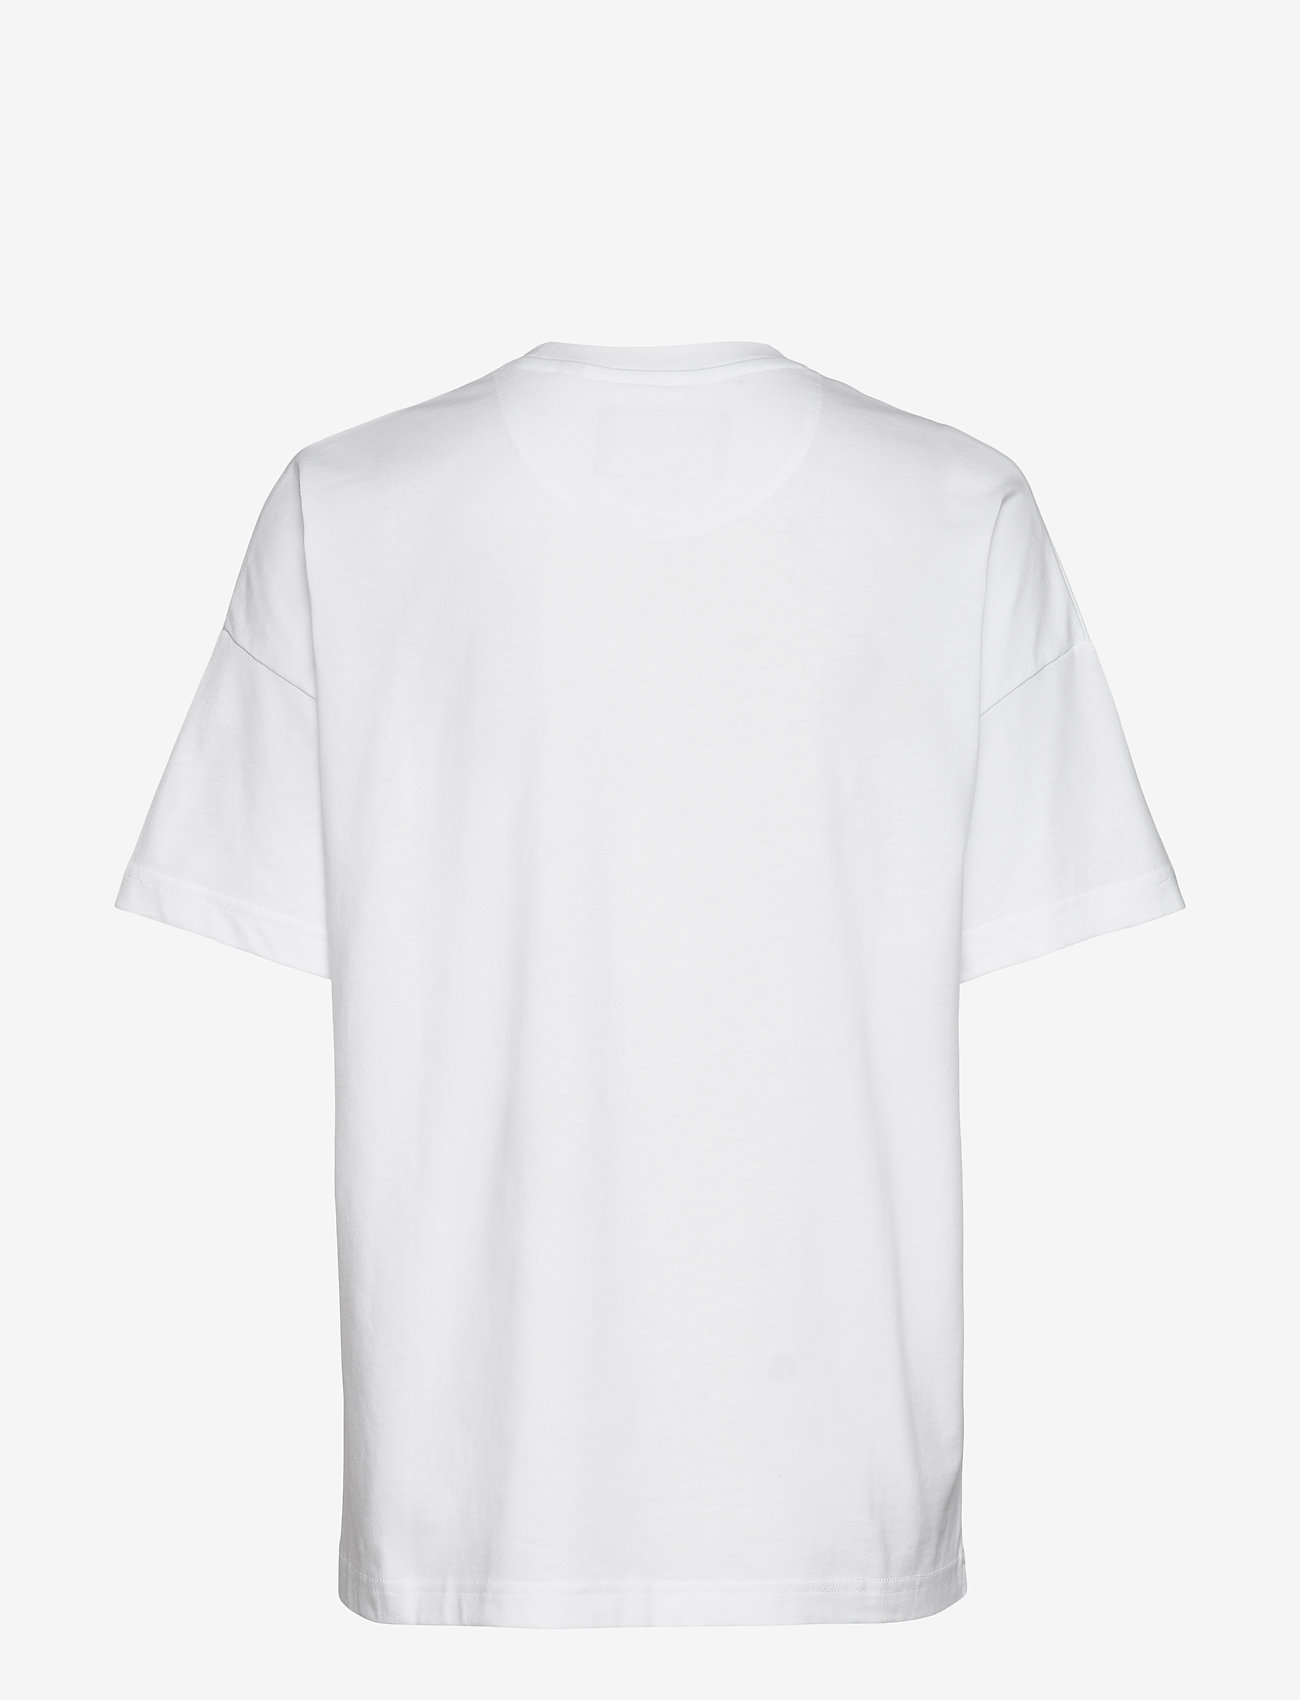 Lyle & Scott - Oversized T-shirt - white - 1